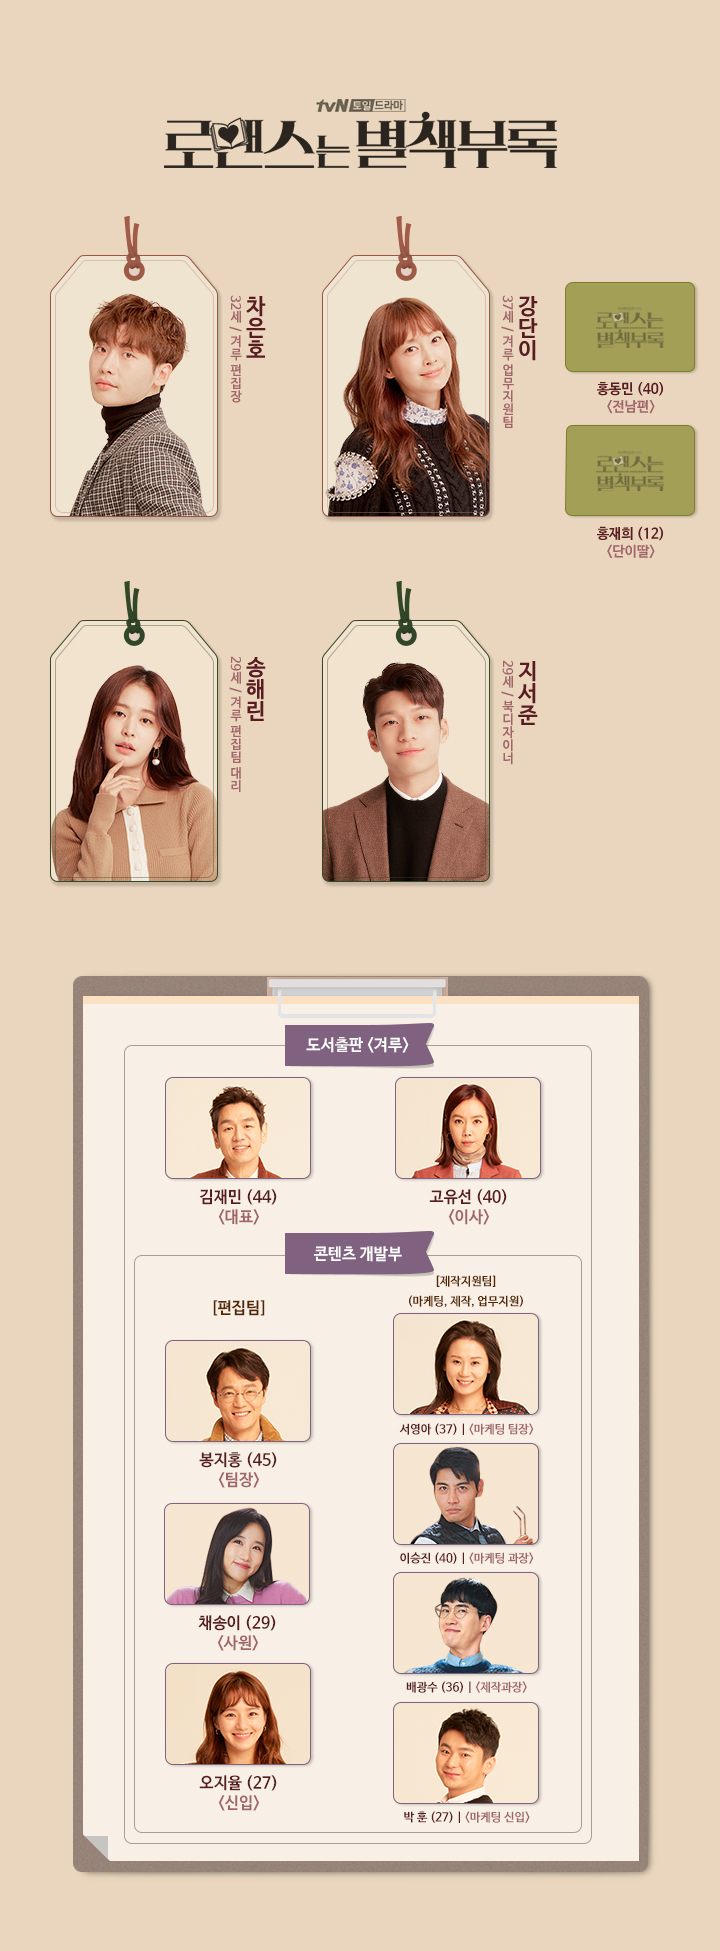 tvN ‘로맨스는 별책부록’ 인물관계도